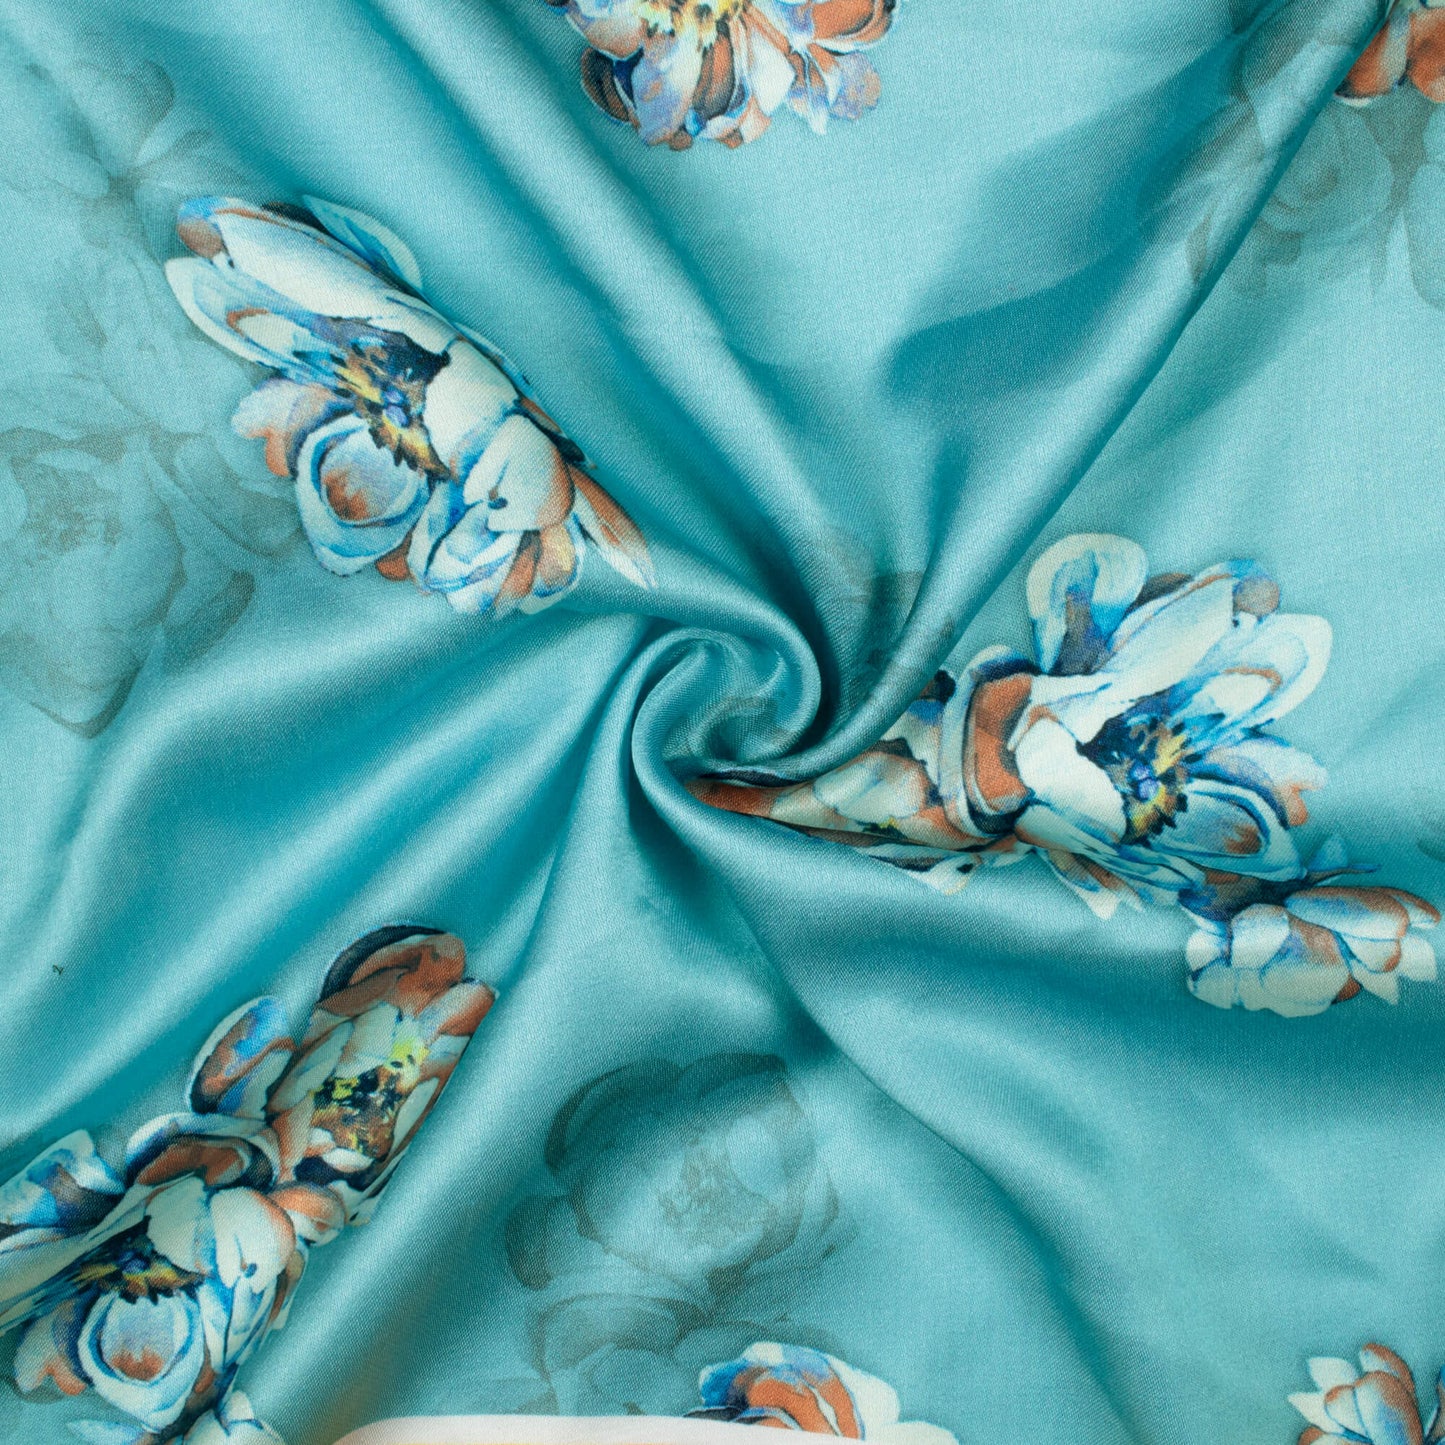 Curious Blue And Orange Floral Pattern Digital Print Premium Lush Satin Fabric